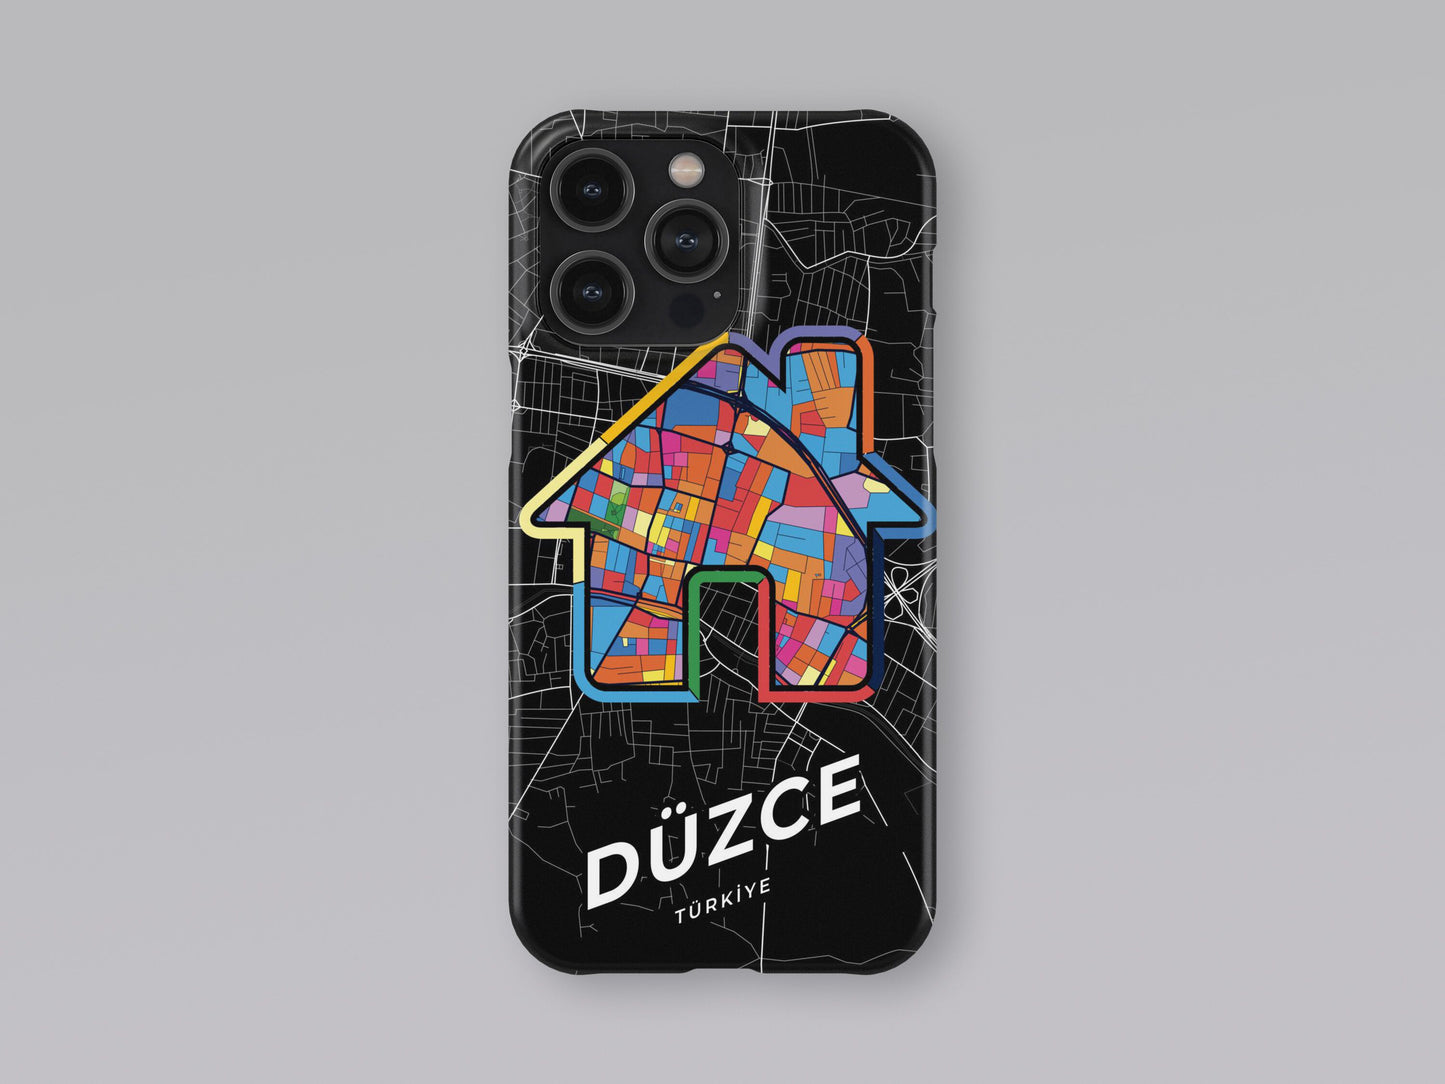 Düzce Turkey slim phone case with colorful icon. Birthday, wedding or housewarming gift. Couple match cases. 3